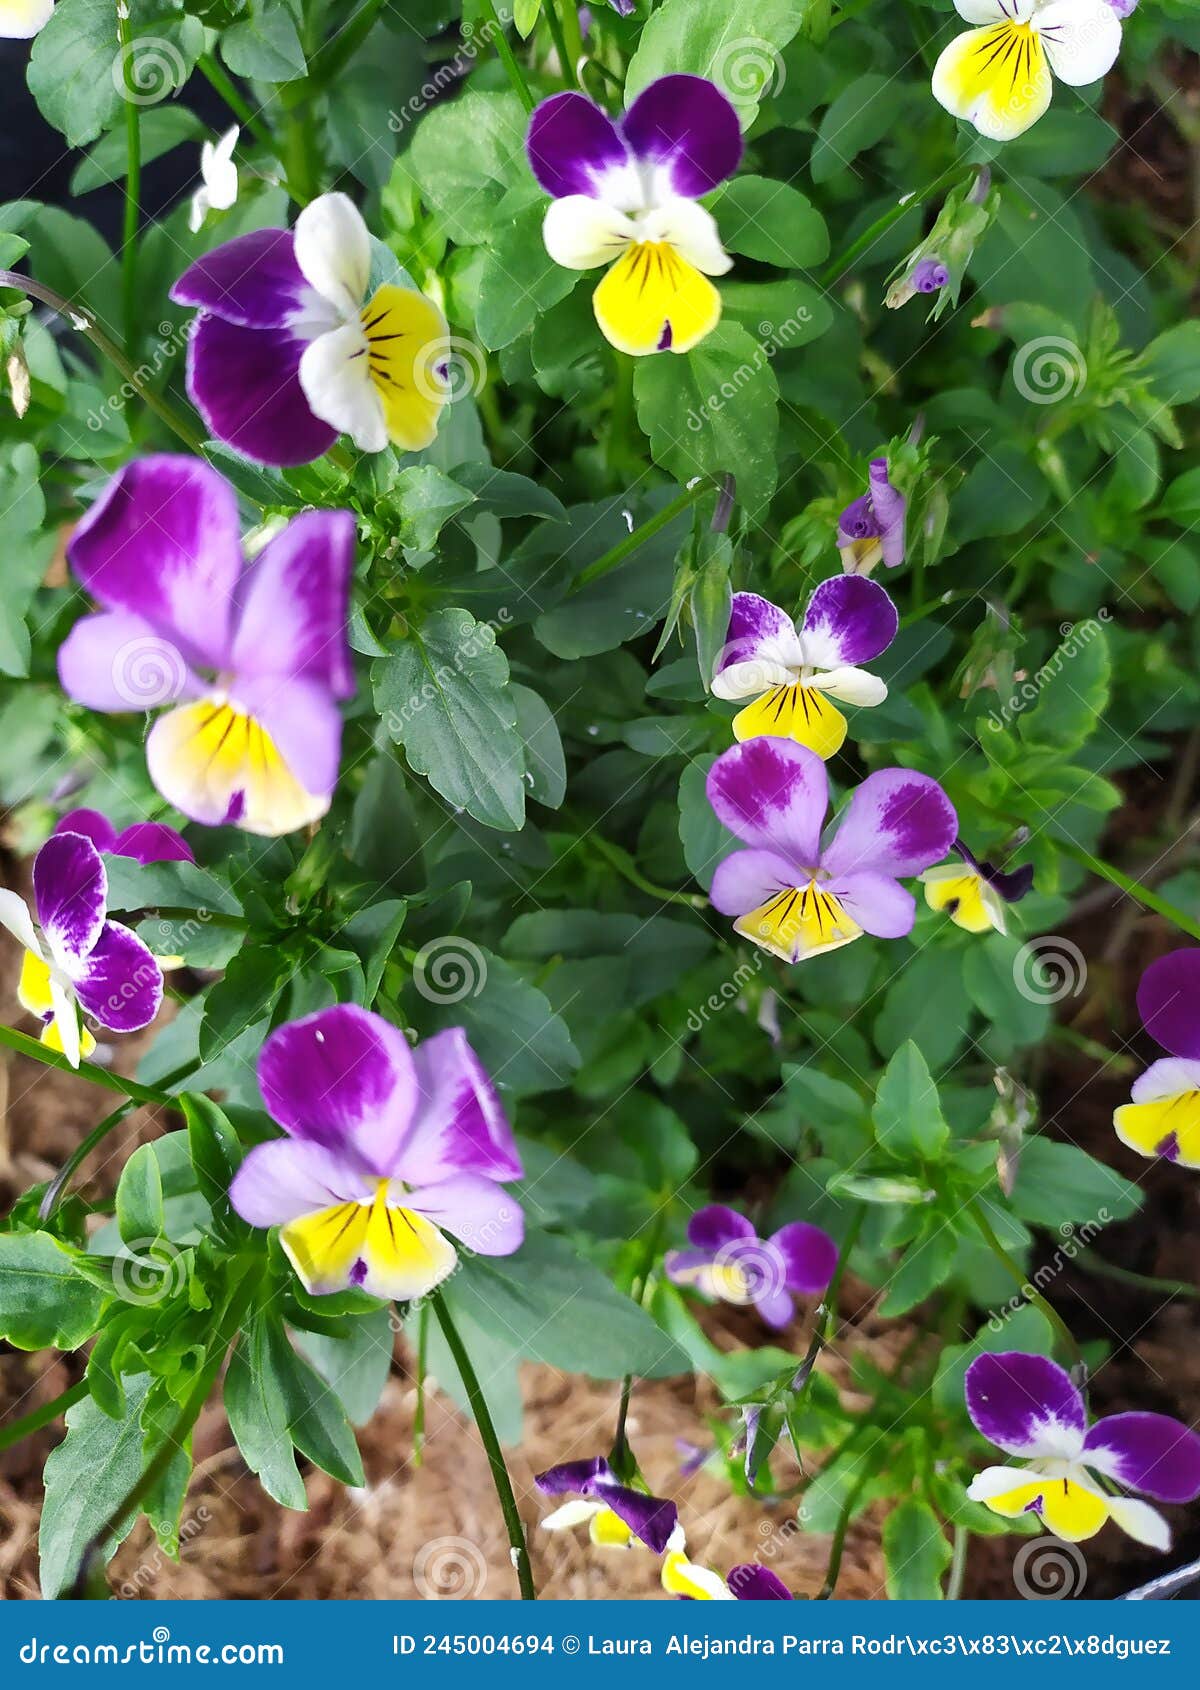 a group of beautiful purple, white and yellow pansy flowers. un grupo de hermosas flores violas moradas, blancas y amarillas